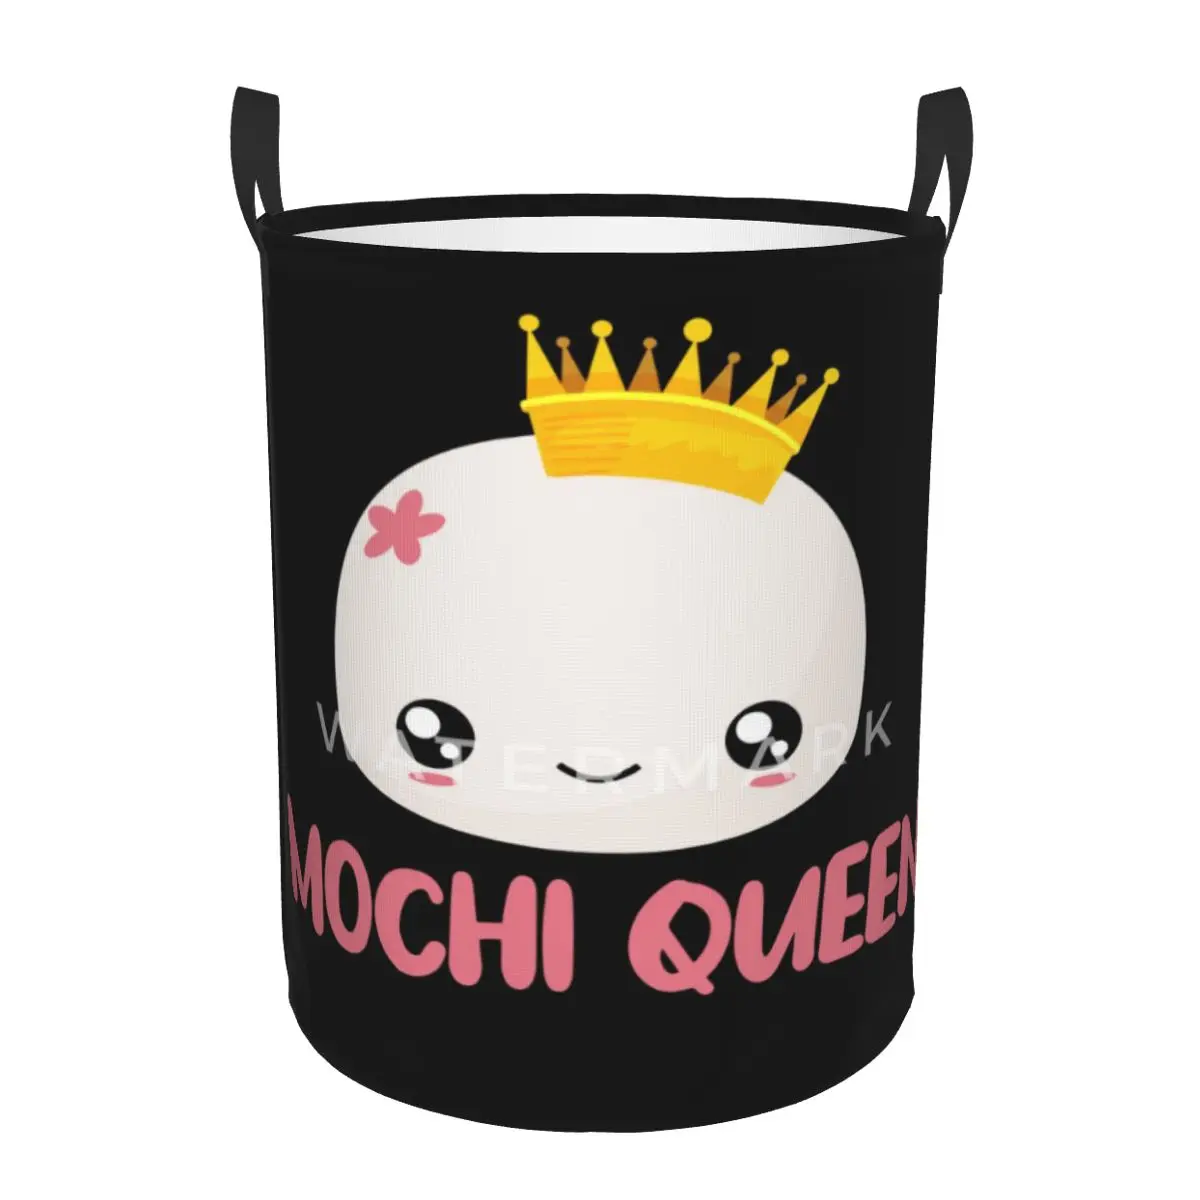 

Mochi Queen Circular hamper,Storage Basket Sturdy and durable bathrooms toys